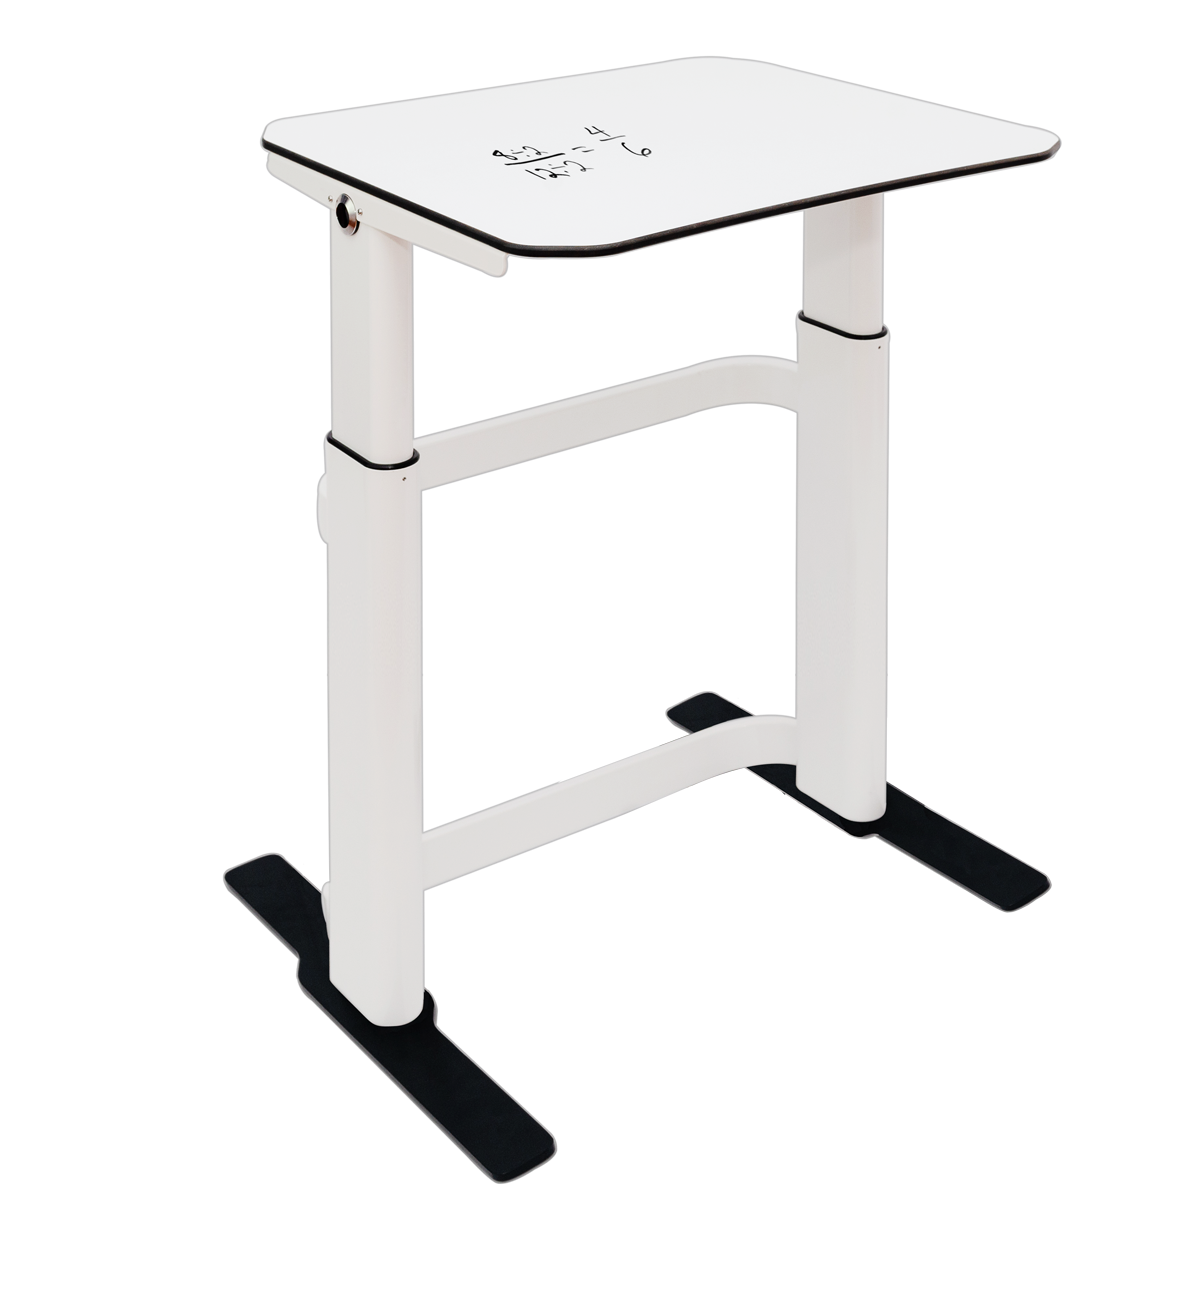 Amperstand-Large Desk-Writable-Steel Feet